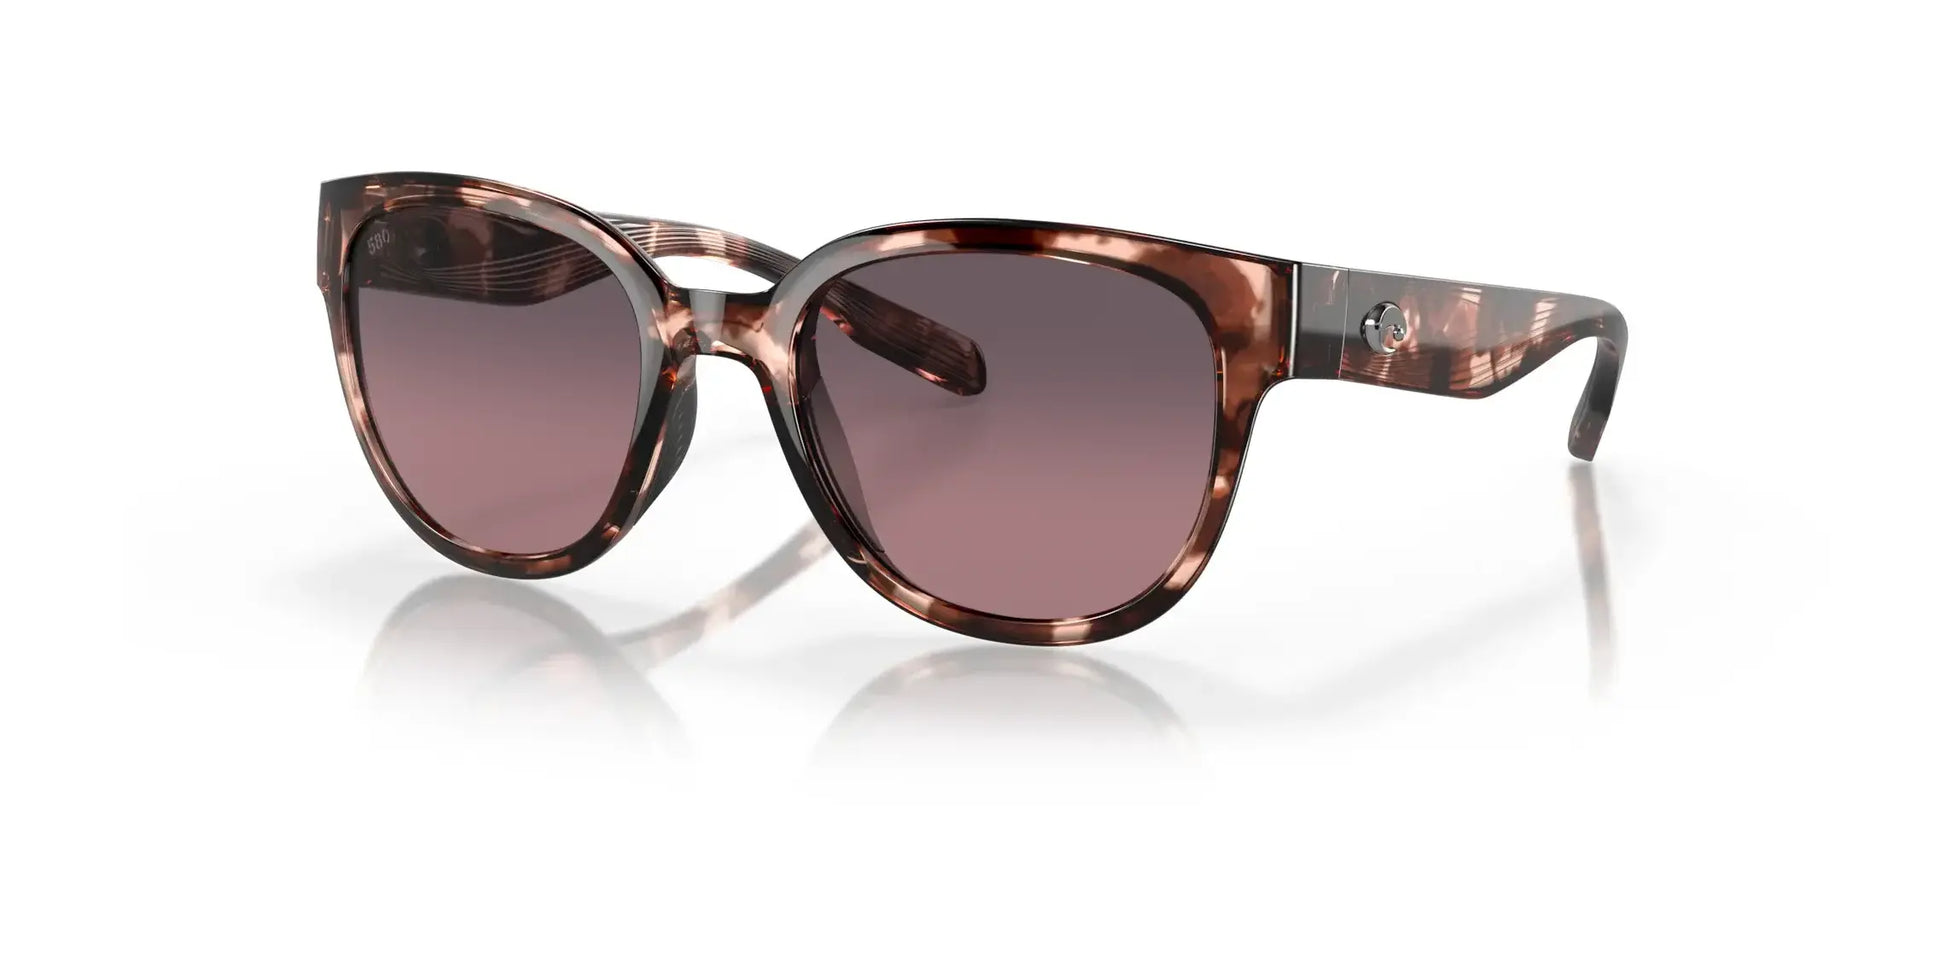 Costa SALINA 6S9051 Sunglasses Coral Tortoise / Rose Gradient